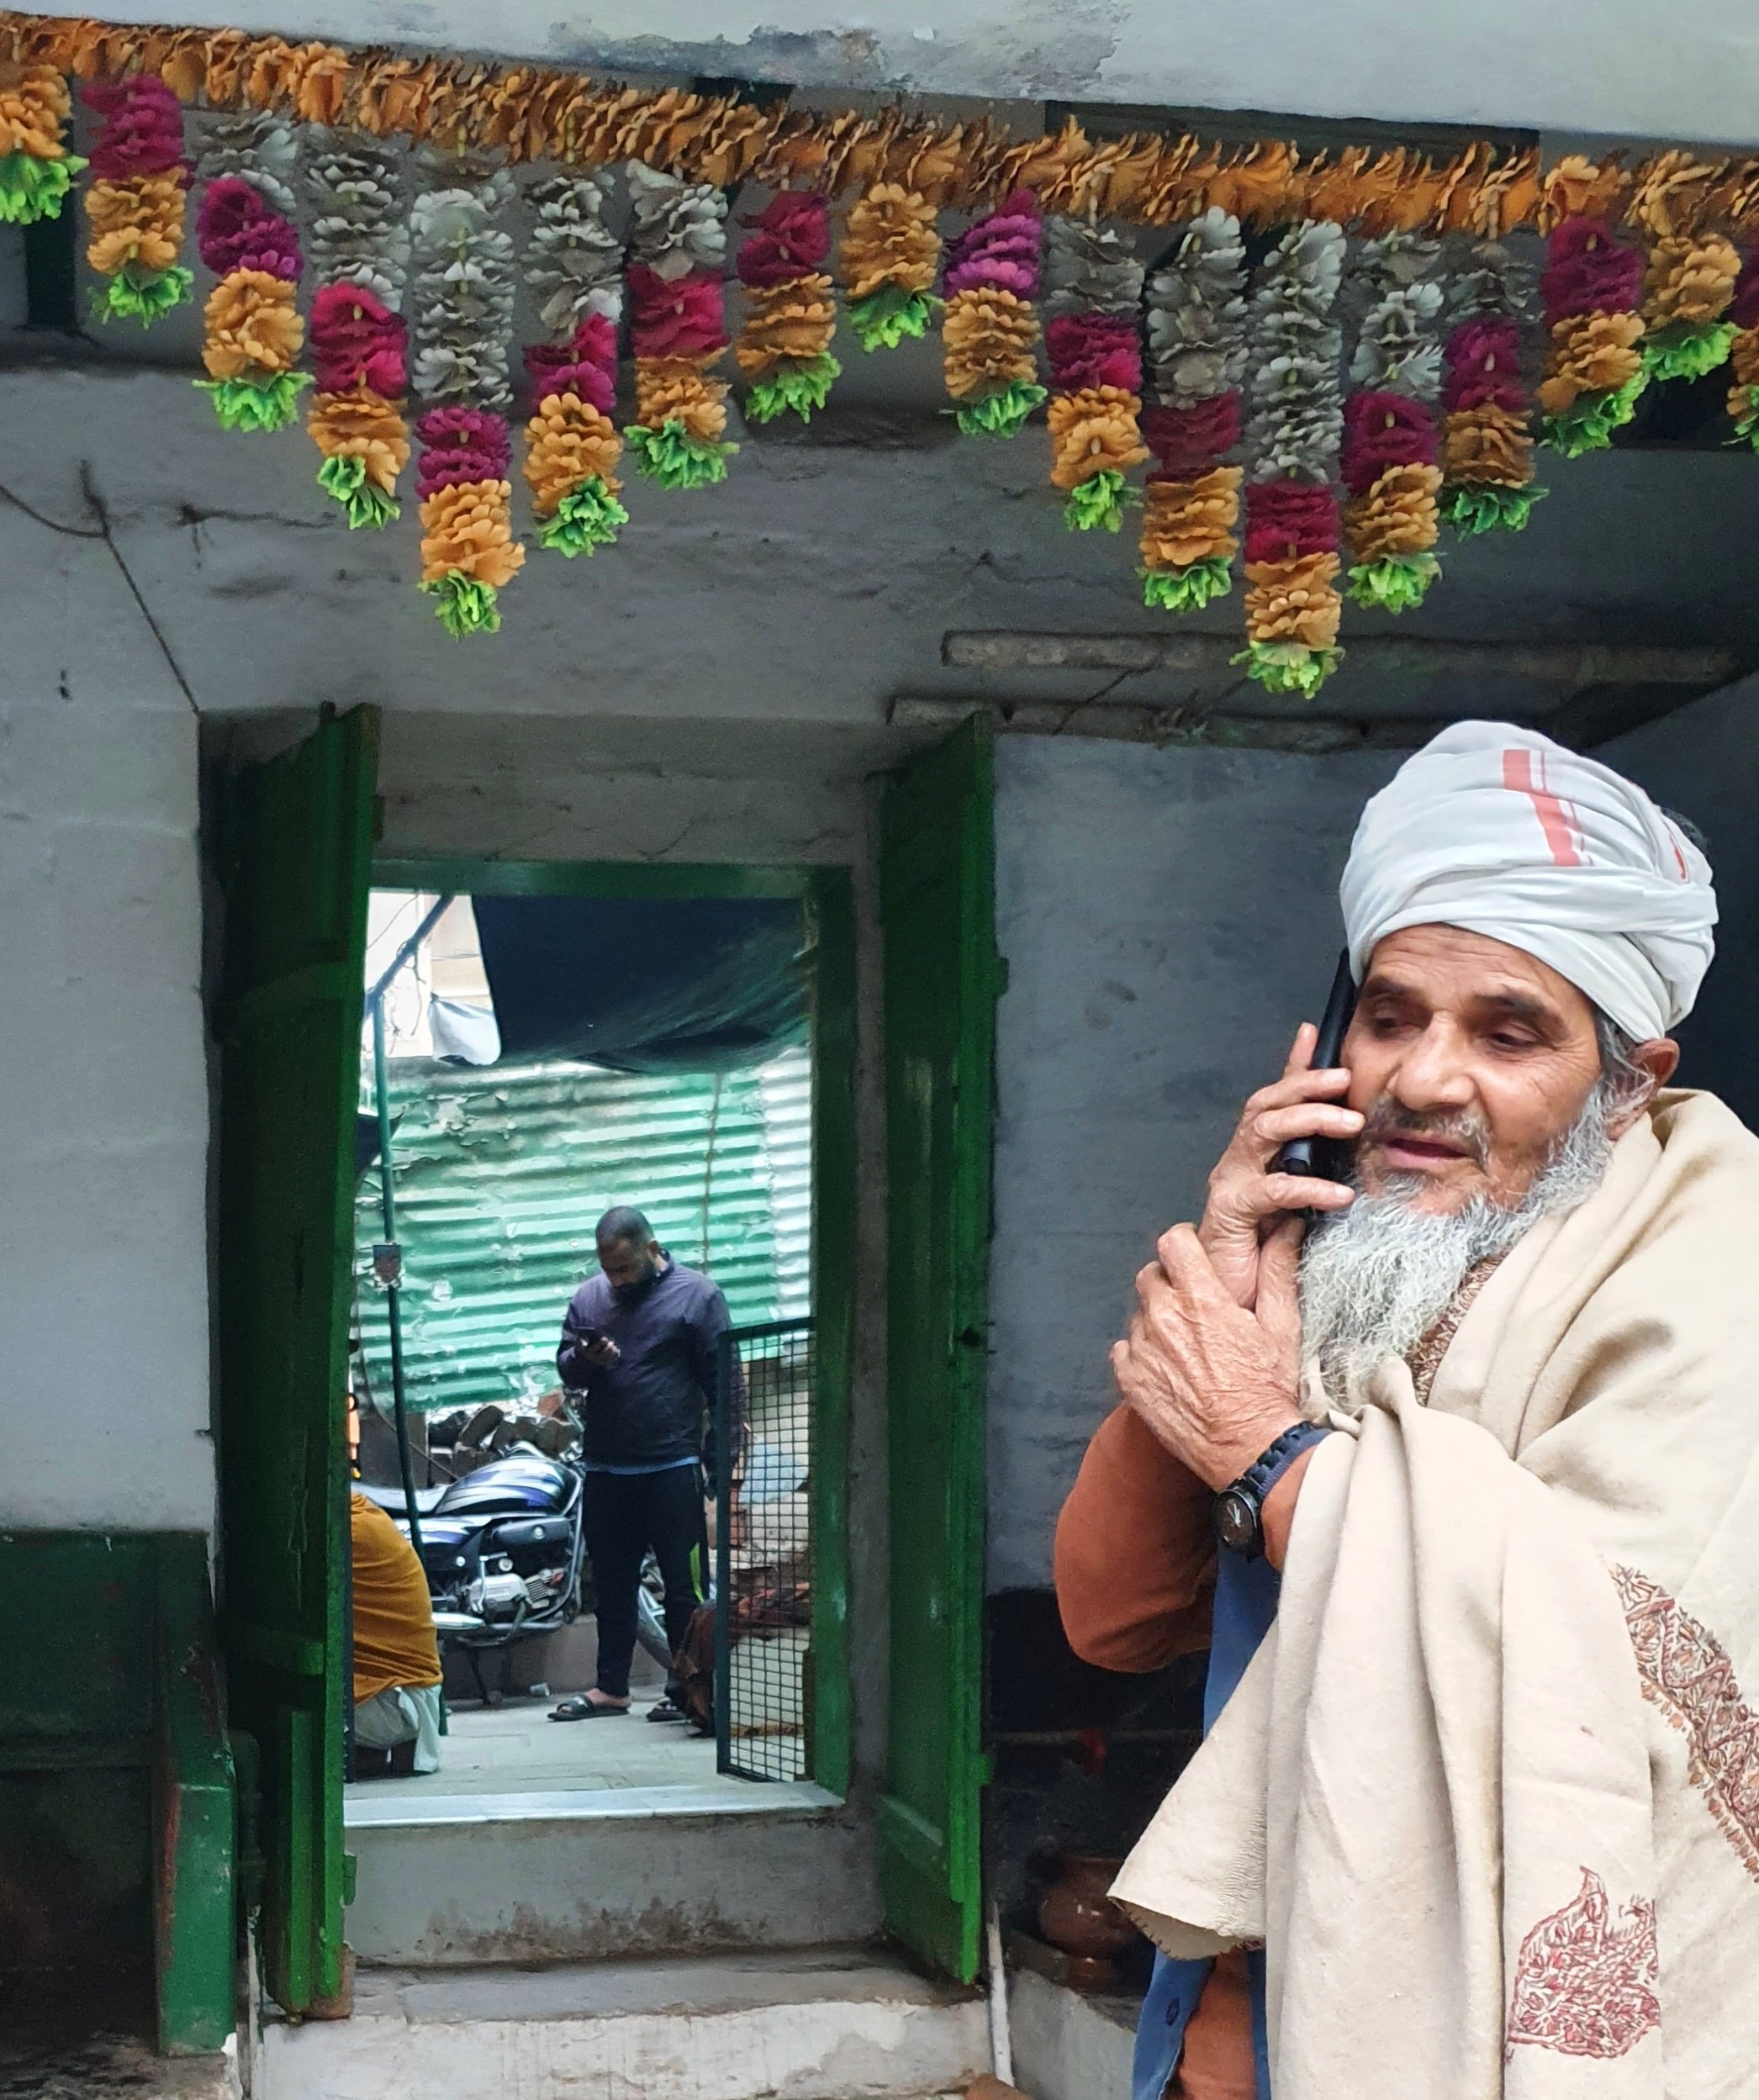 Bechan Baba has been tending to the shrine in Banaras since he was a boy. Photo: Ravi Tripathi